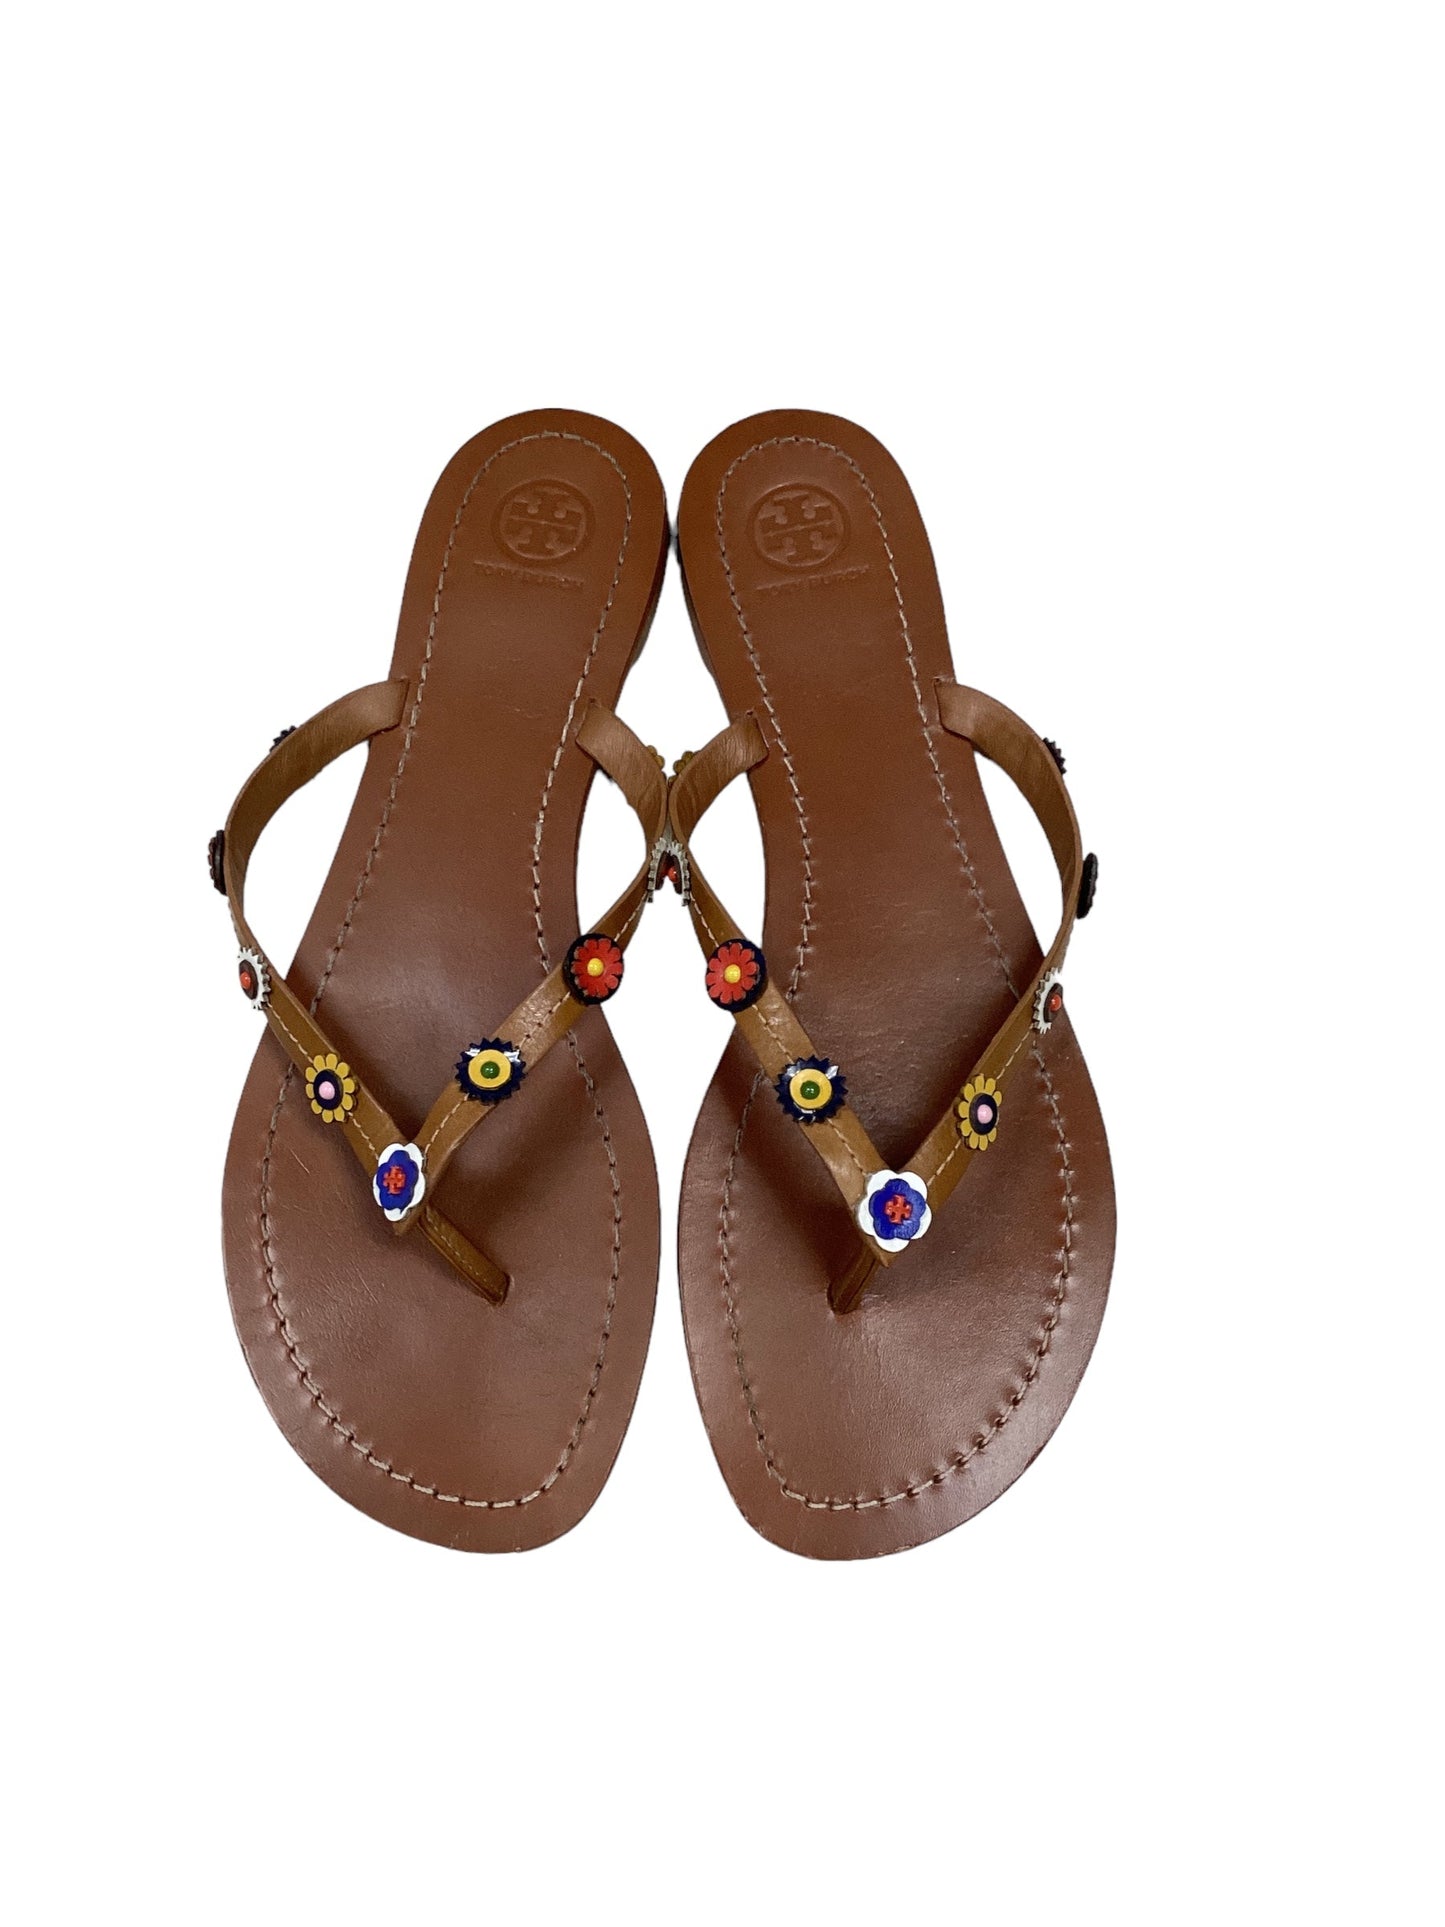 Brown Sandals Flip Flops Tory Burch, Size 10